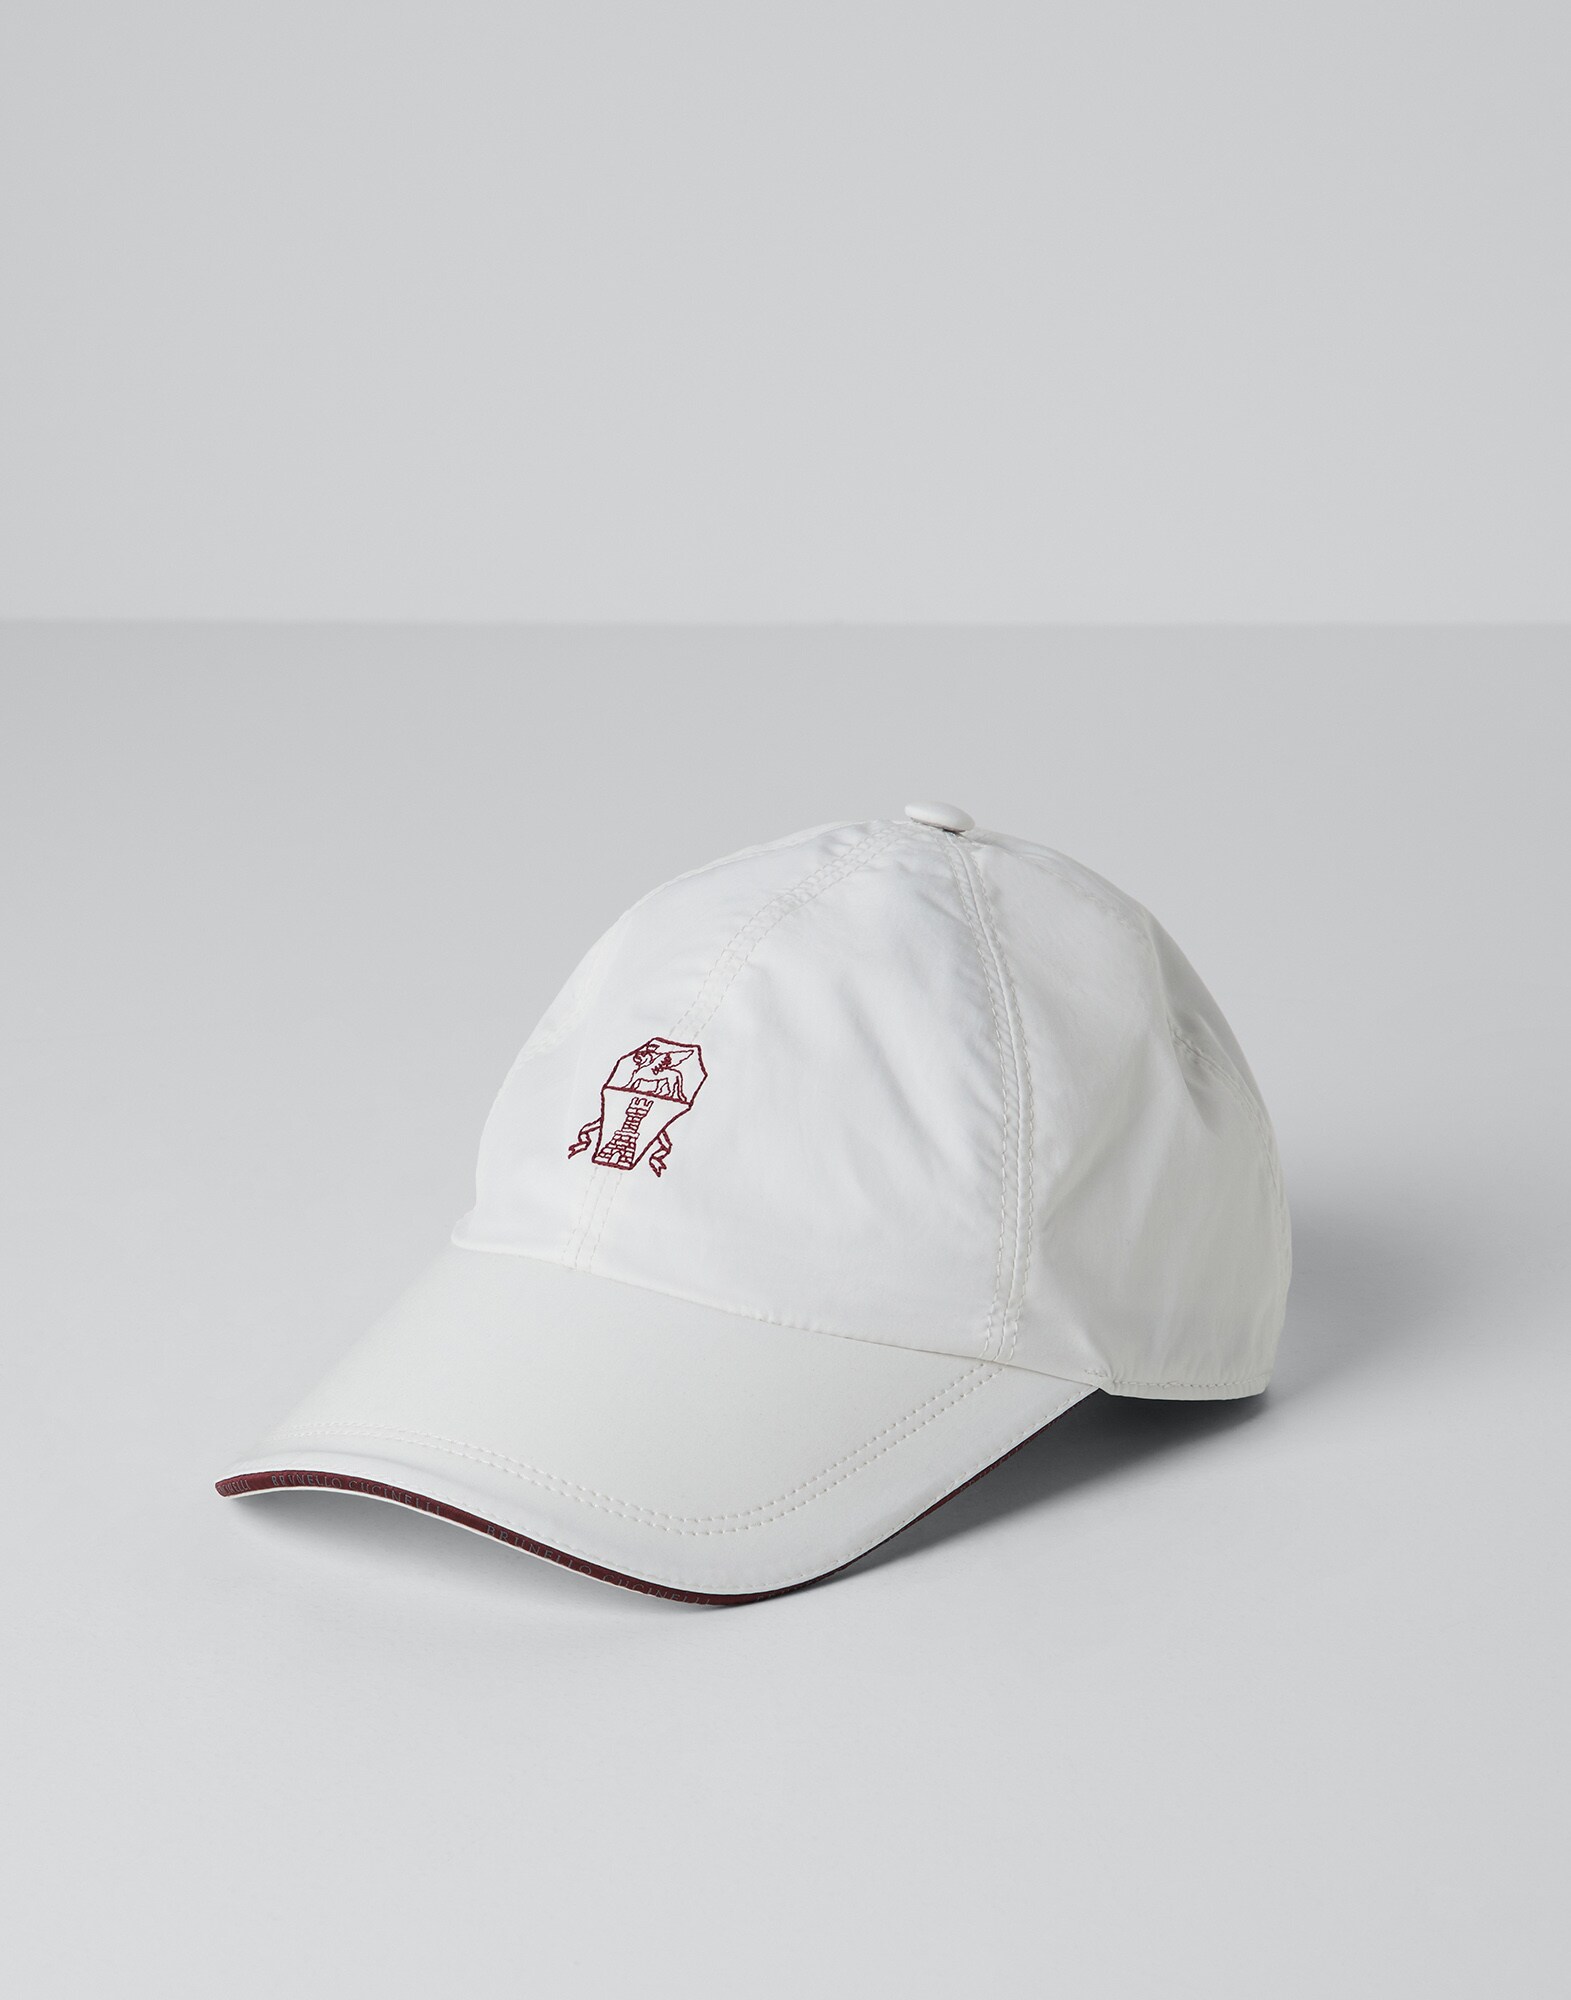 Microfiber baseball cap